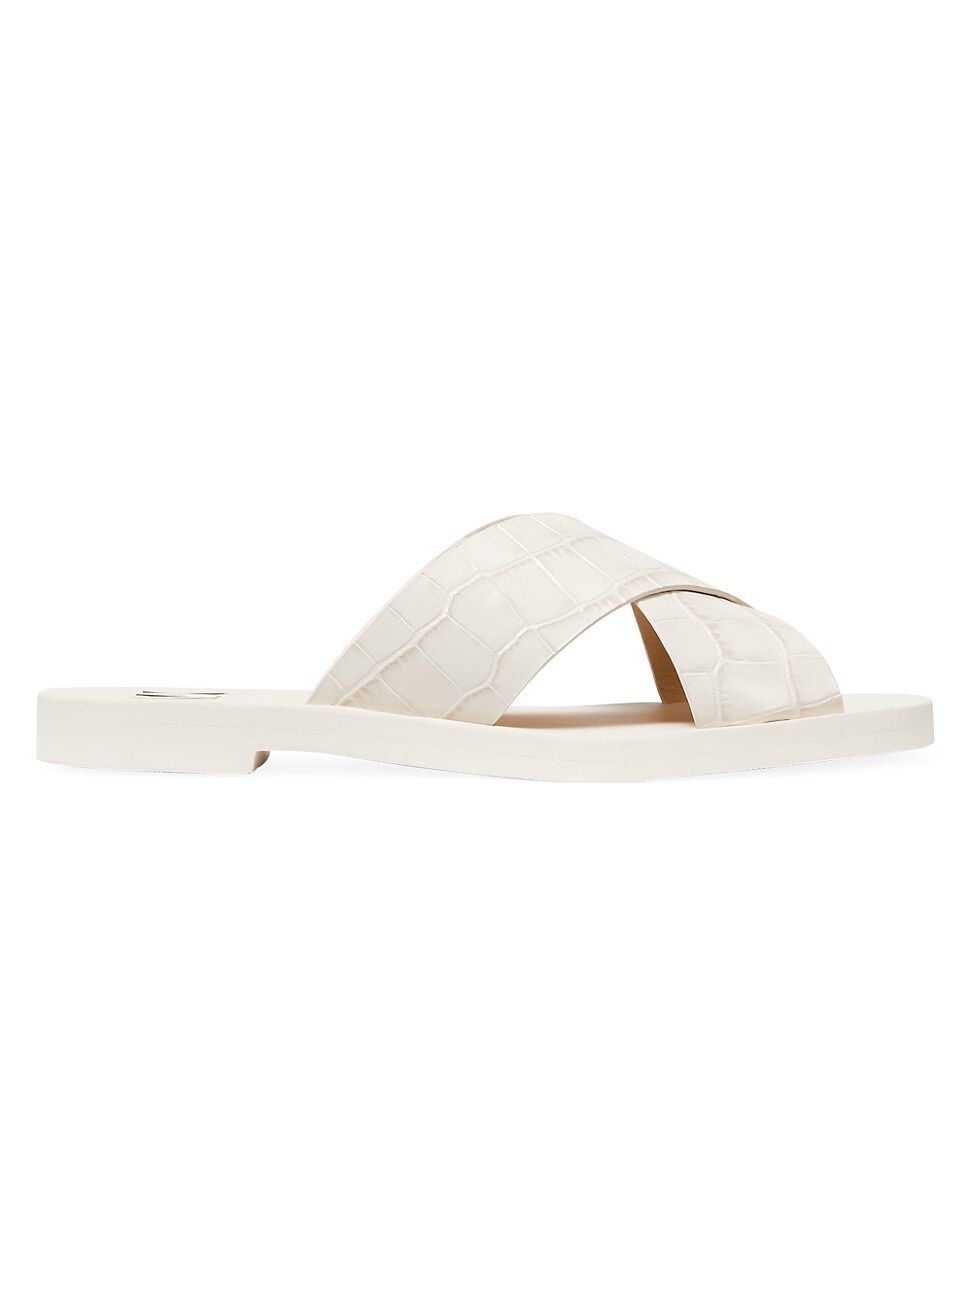 MICHAEL Michael Kors Women's Glenda Croc-Embossed Leather Slide Sandals - Light Cream - Size 9 | Saks Fifth Avenue